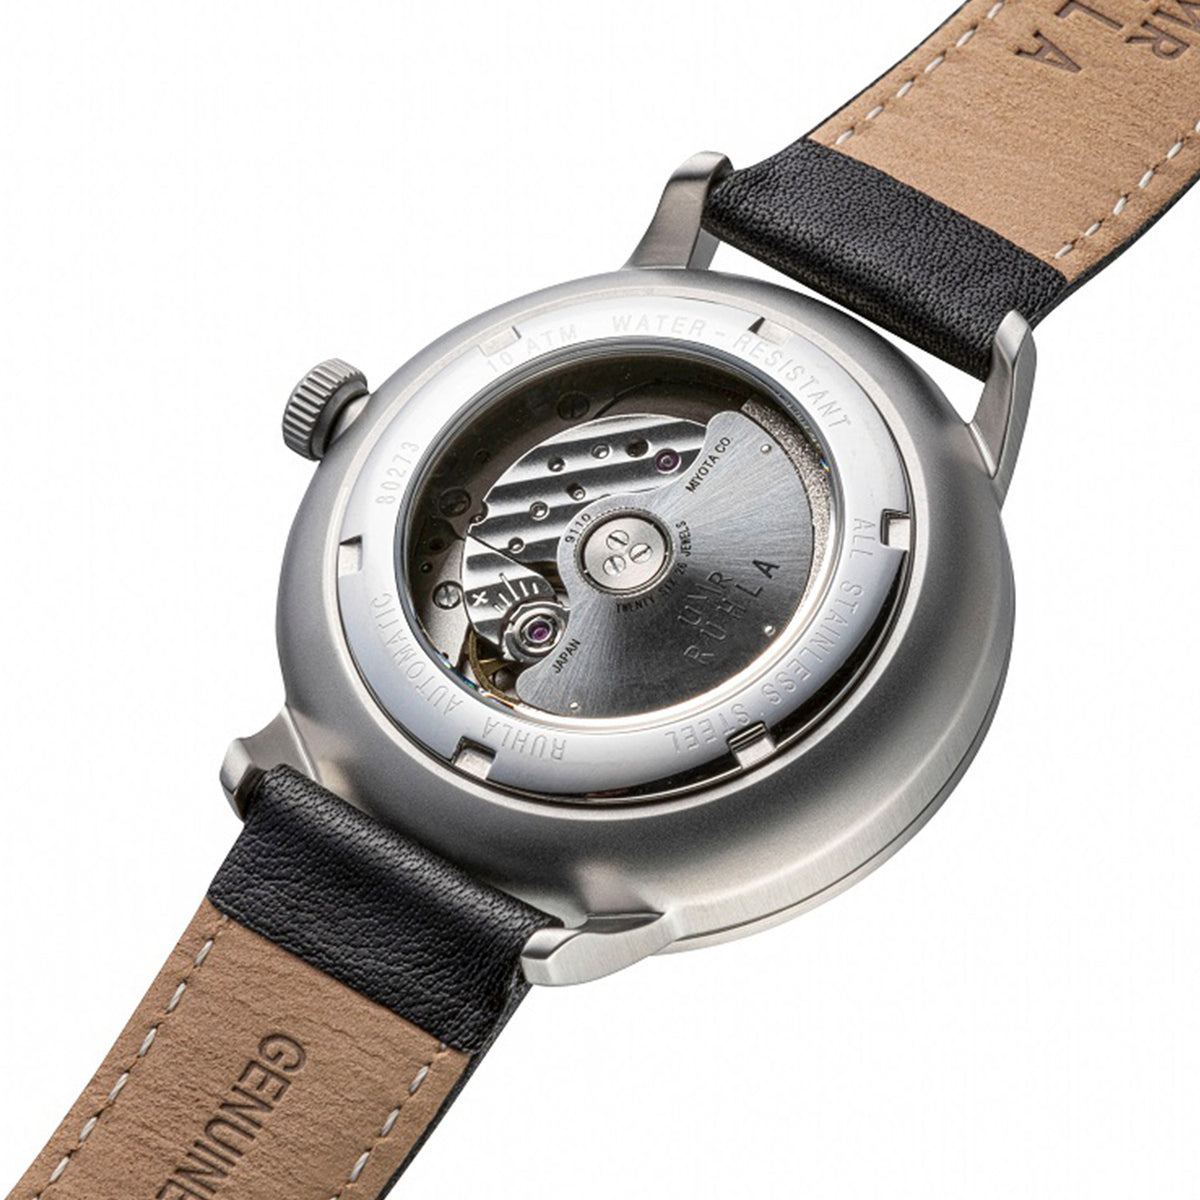 UMR RUHLA Herren-Armbanduhr Automatic 80273, Edelstahlgehäuse, Mineralglas, Lederband, 10 bar